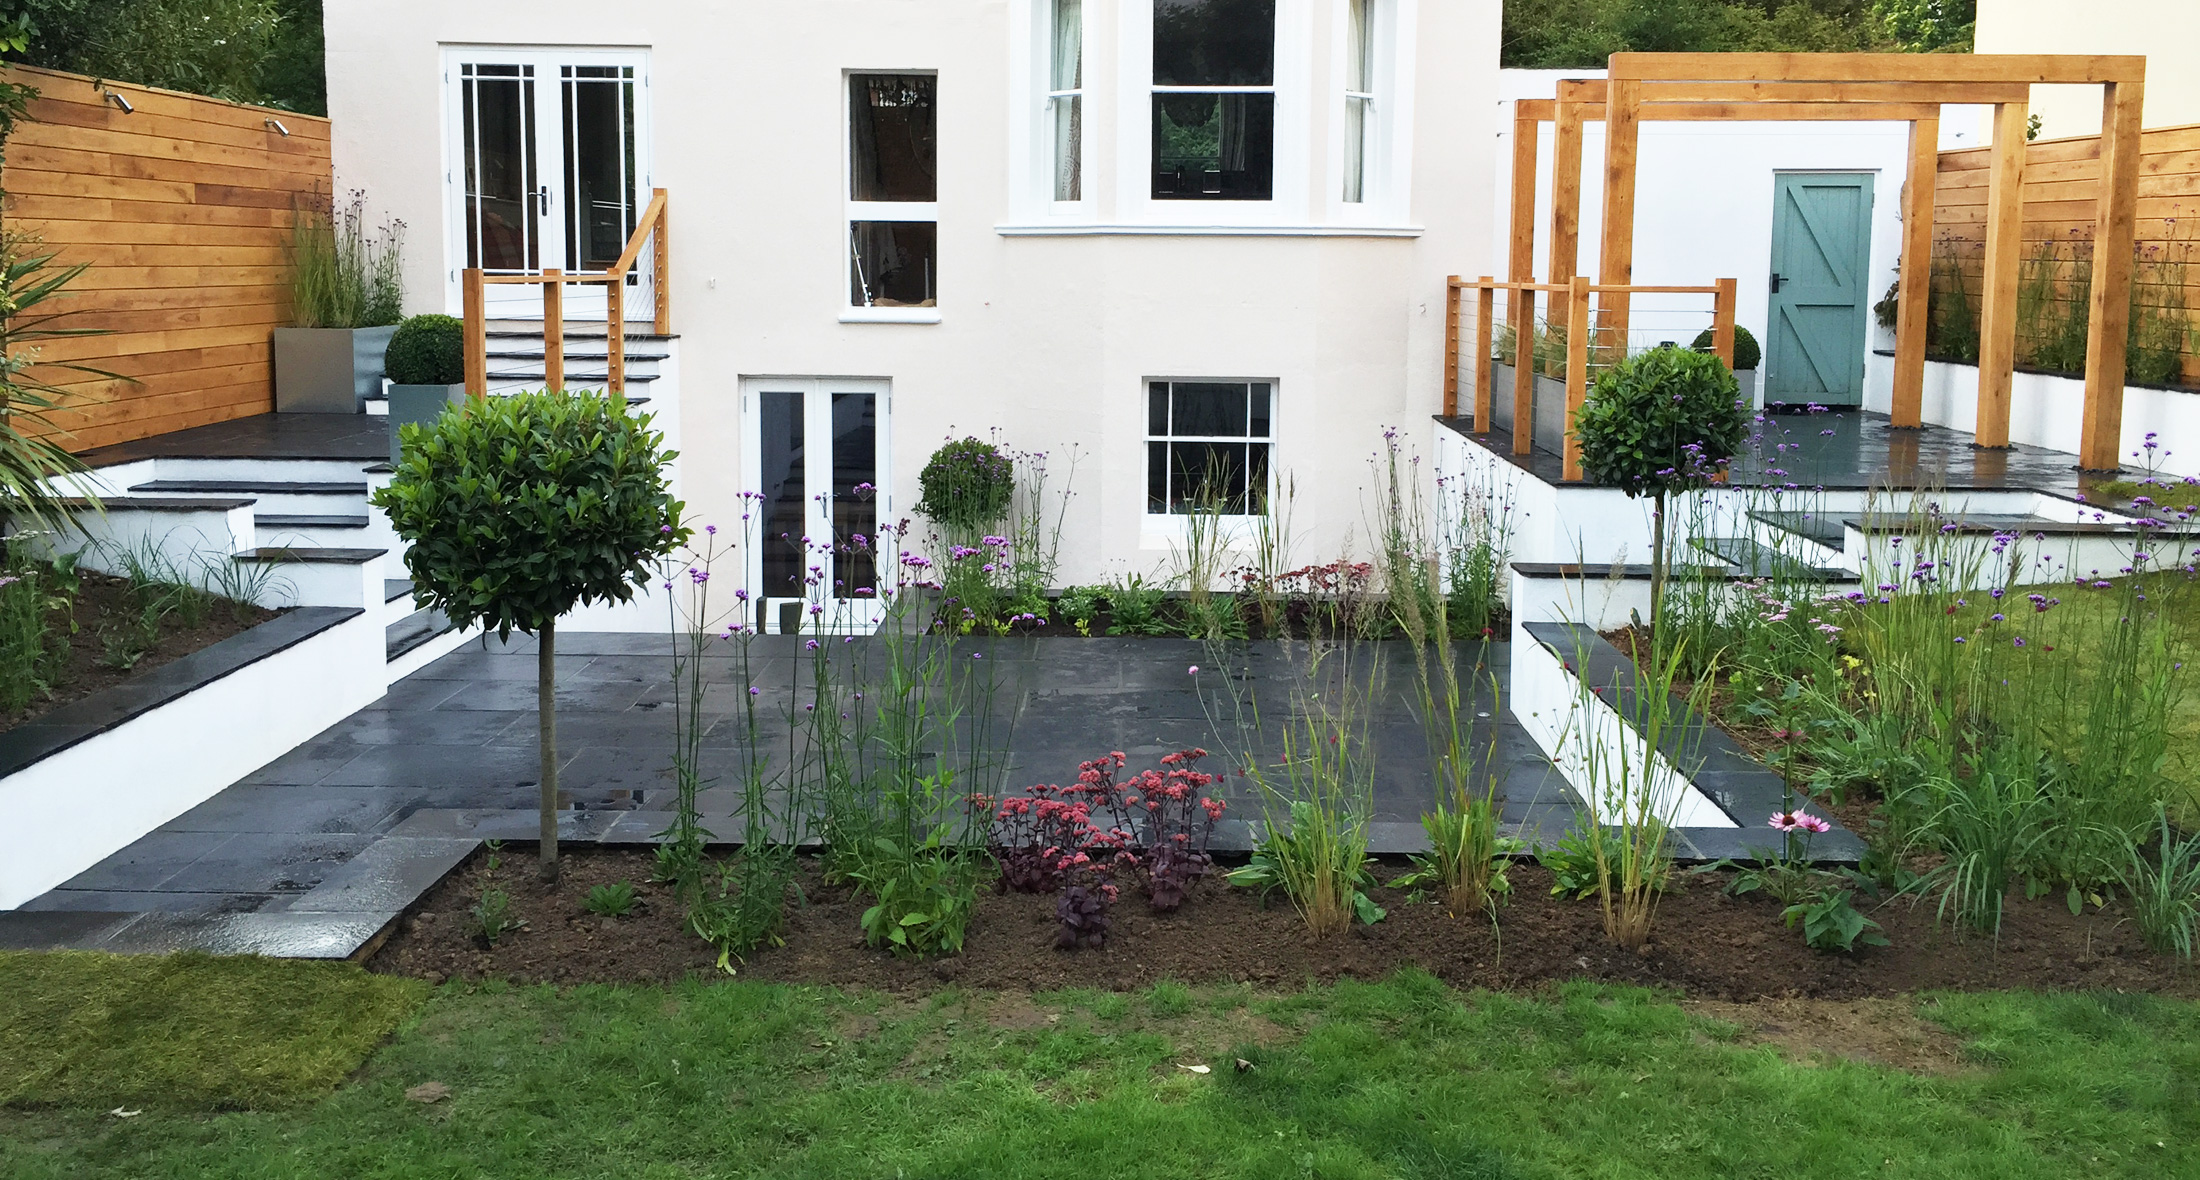 the completed garden patio area design and build , Tunbridge Wells, Kent